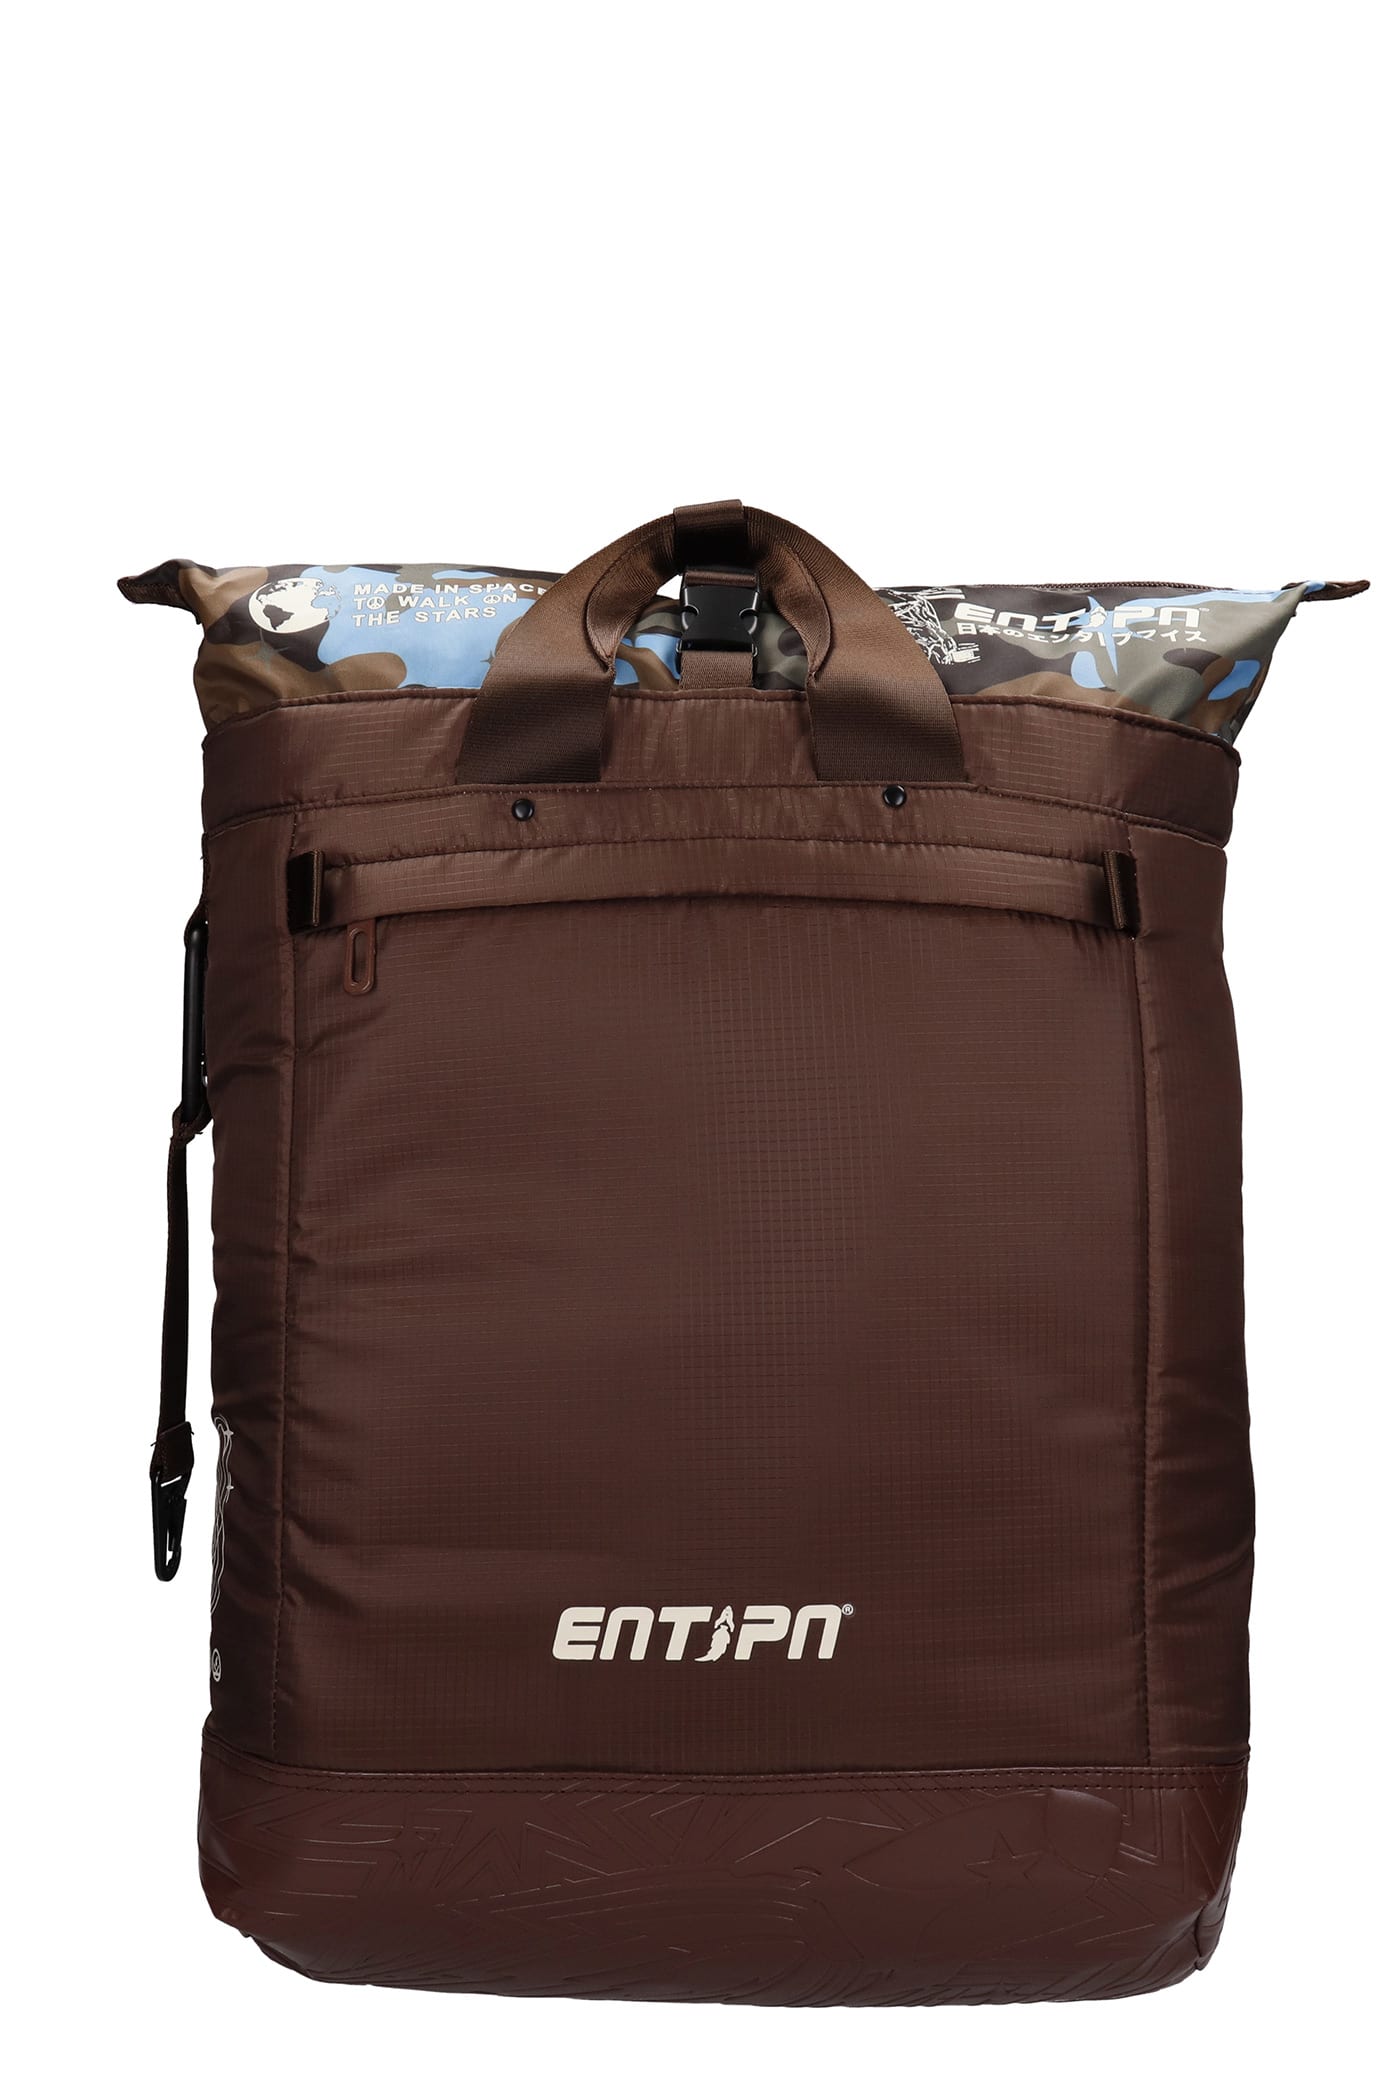 Enterprise Japan Backpack In Brown Nylon